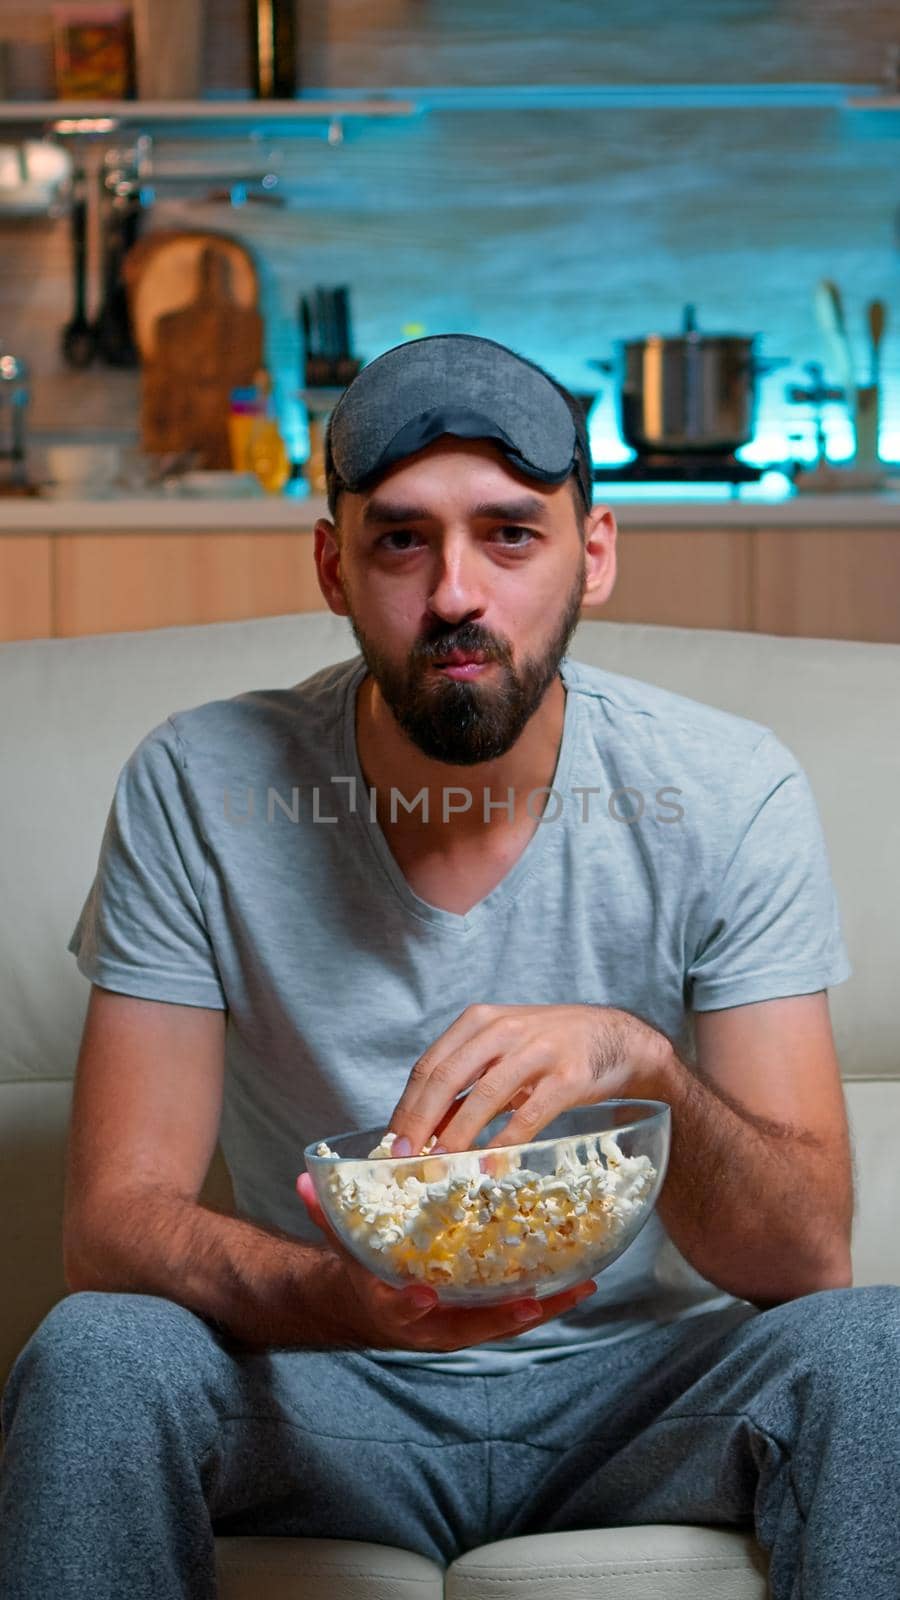 Portrait of man with beard holding popcorn bowl by DCStudio